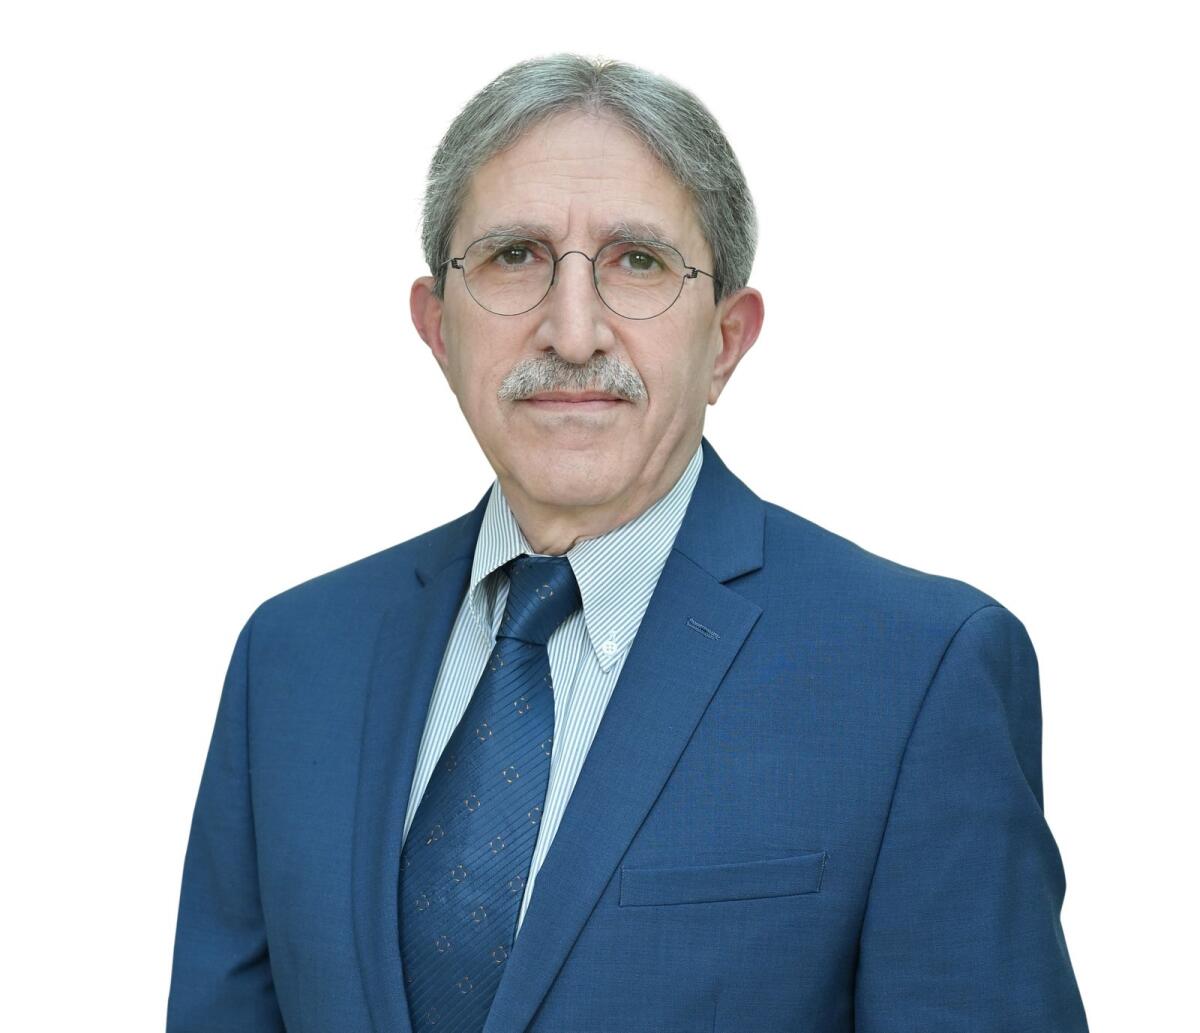 Dr Muhieddine Seoud